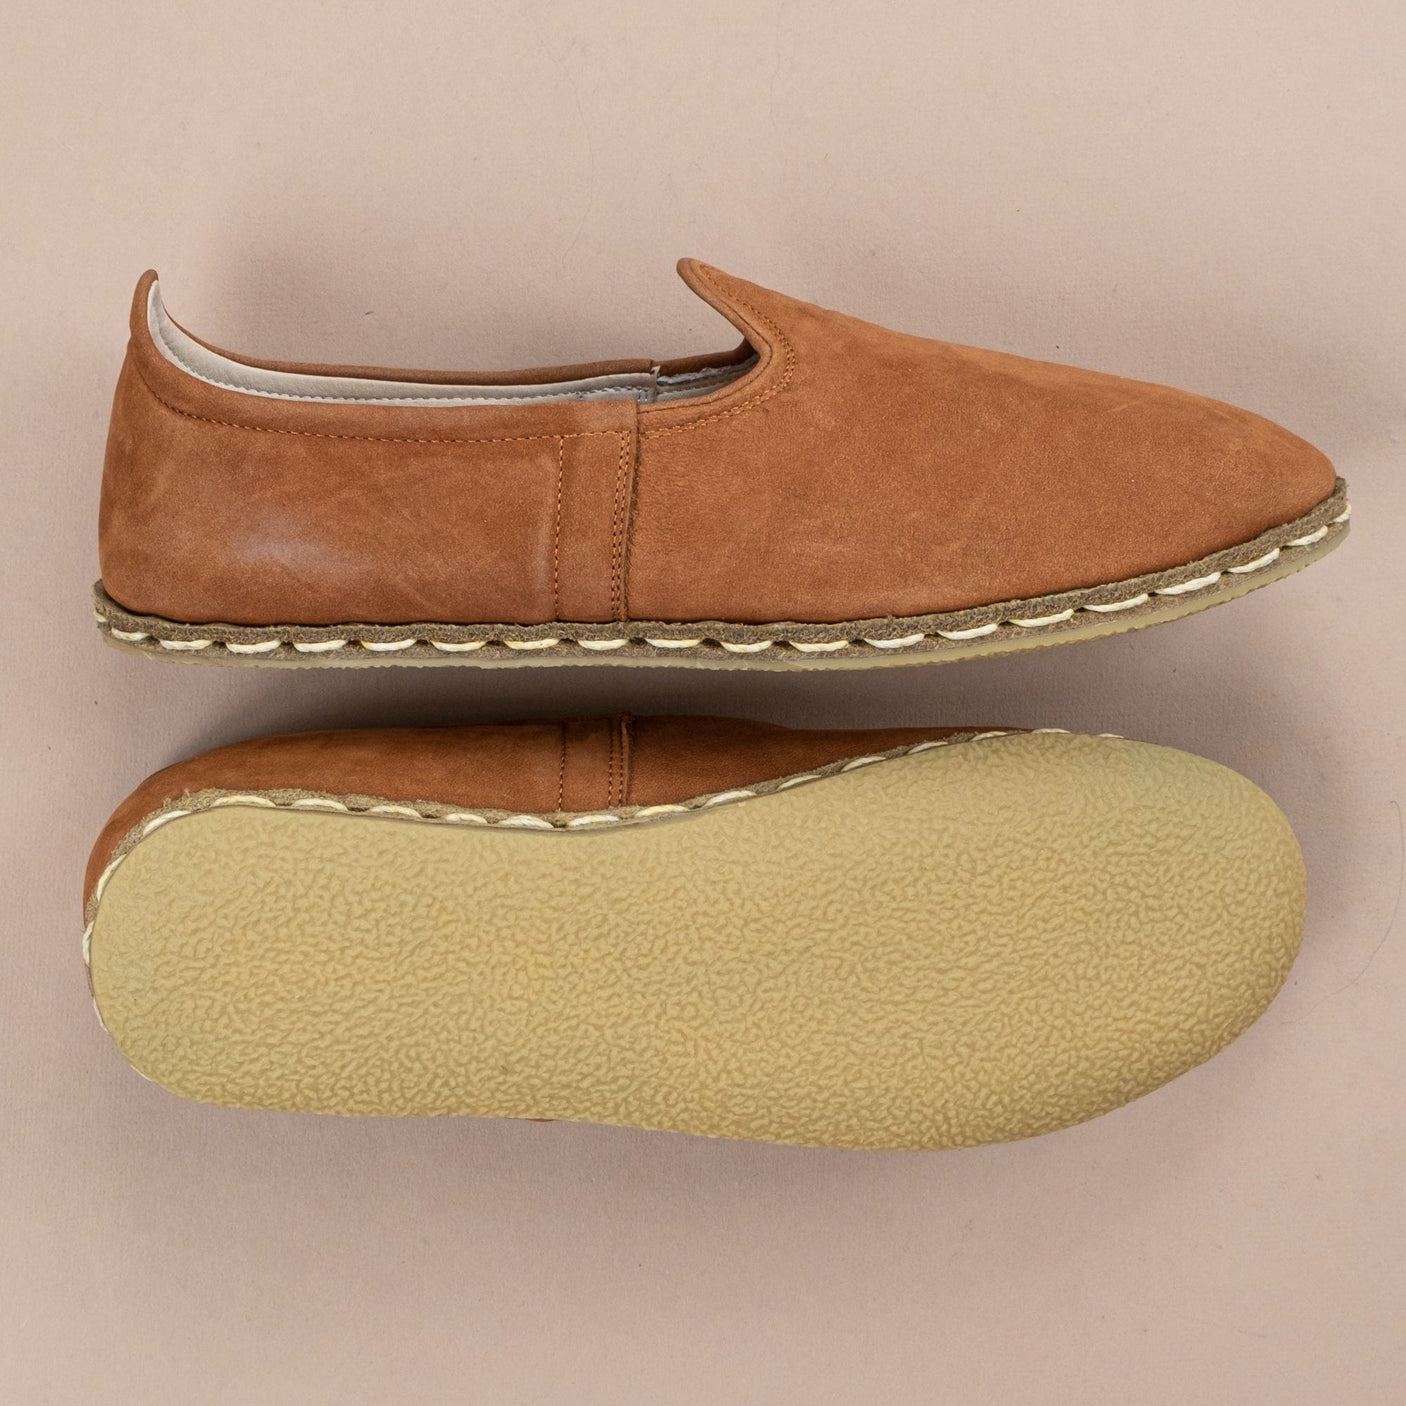 Safari-Slip-On-Schuhe für Damen